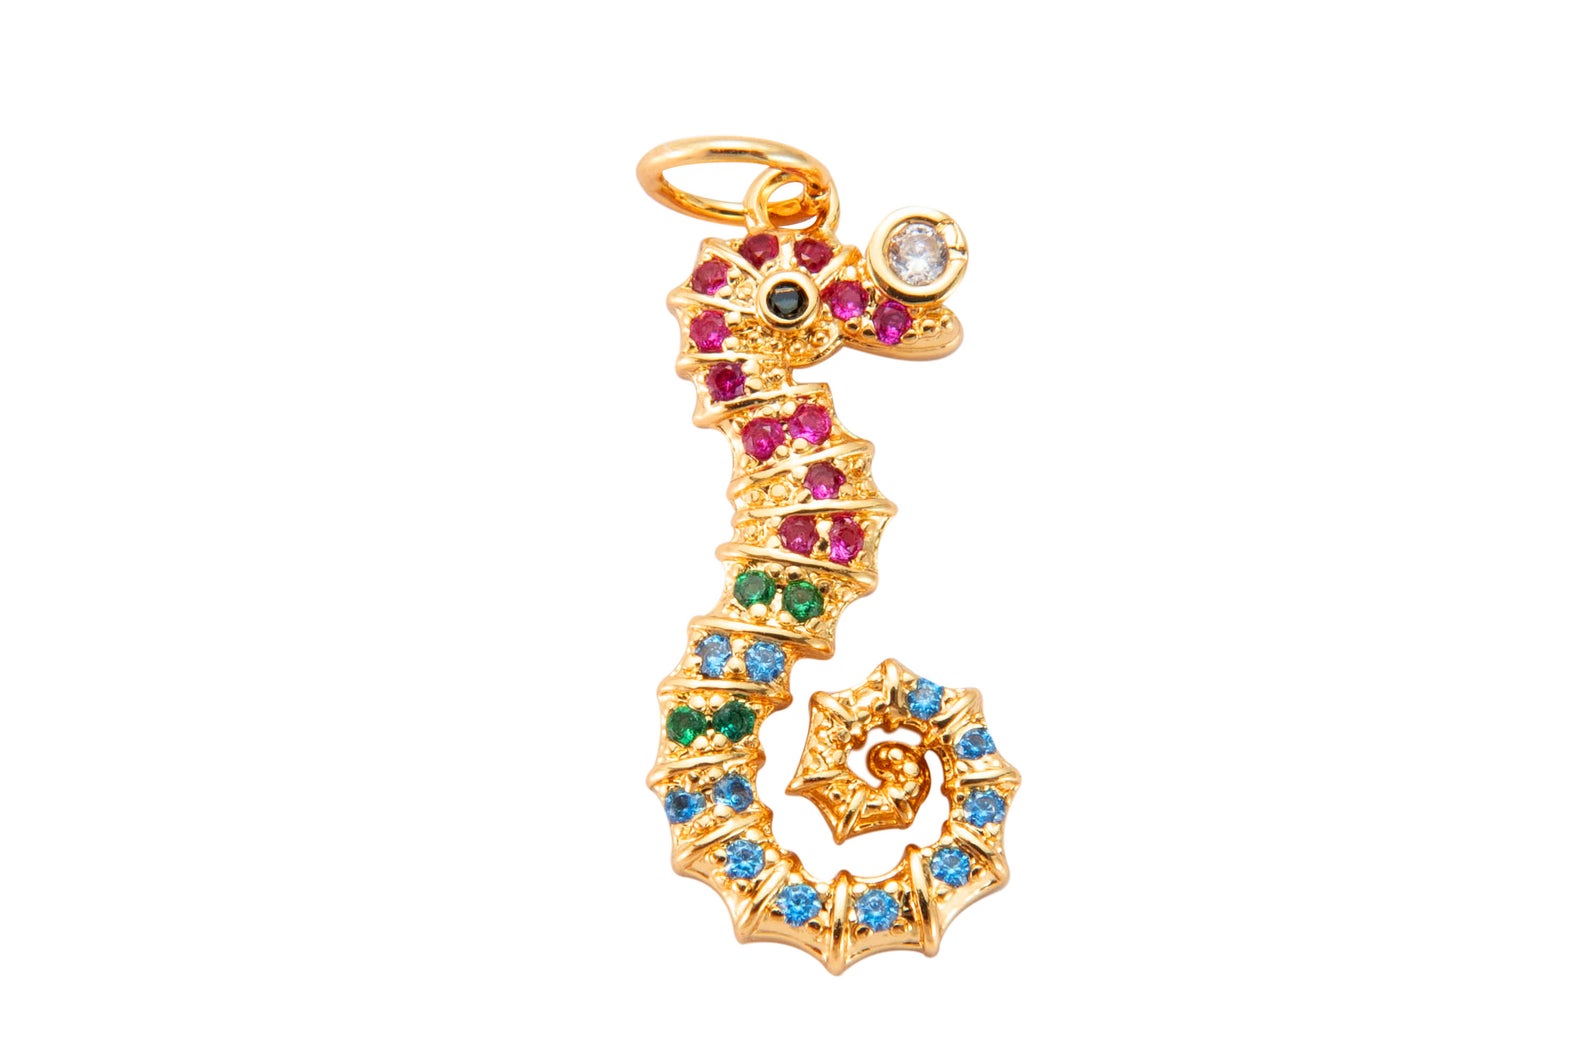 Sea Horse Charm - Rania Dabagh Jewelry